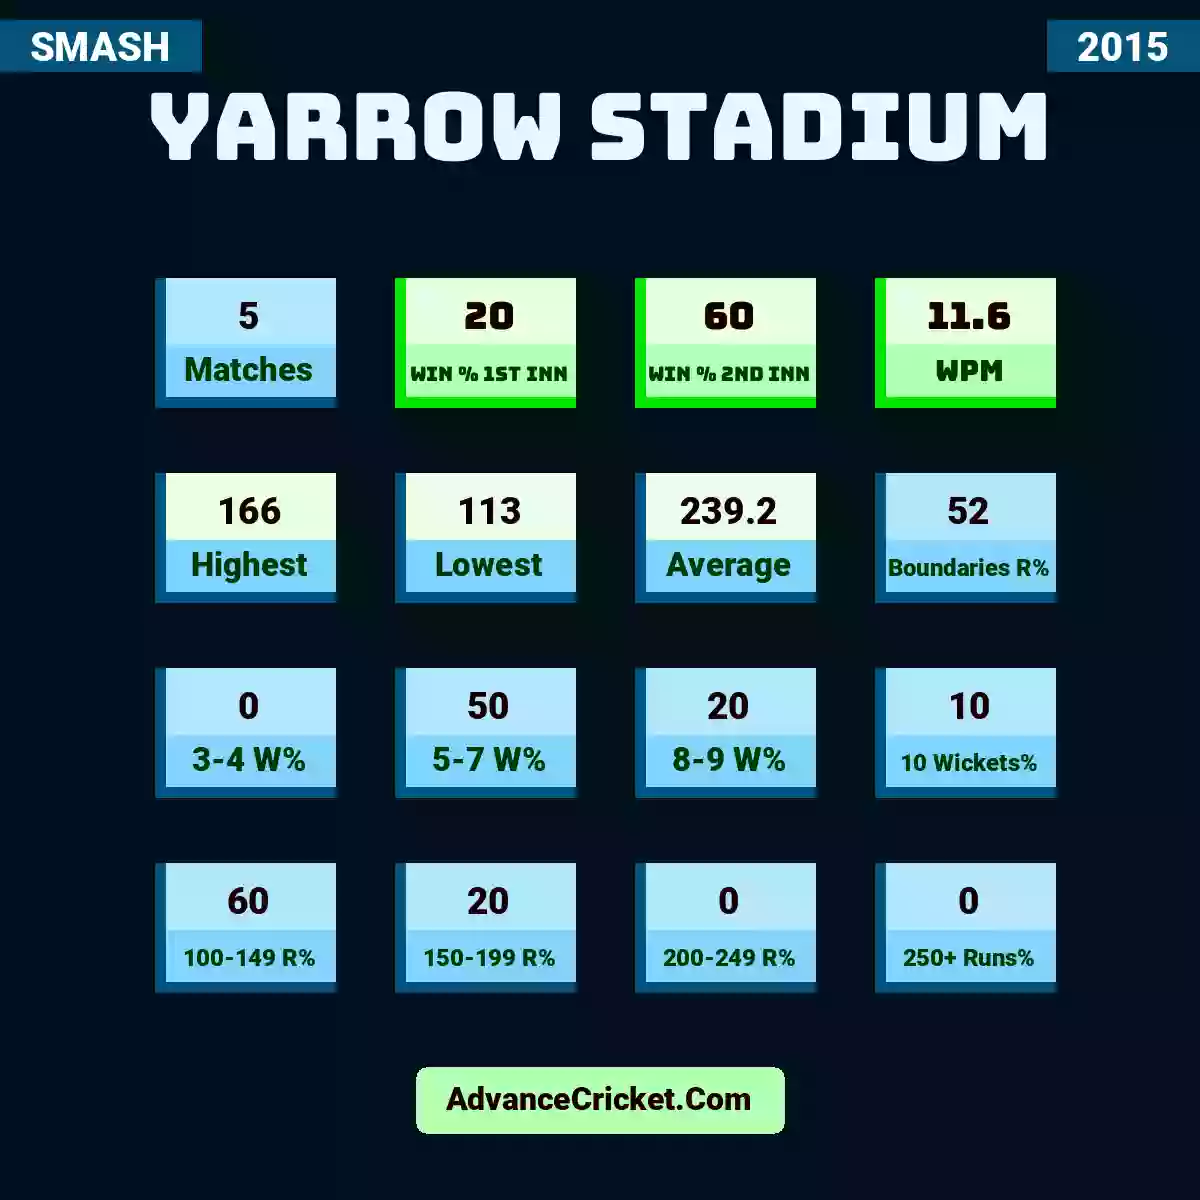 Image showing Yarrow Stadium with Matches: 5, Win % 1st Inn: 20, Win % 2nd Inn: 60, WPM: 11.6, Highest: 166, Lowest: 113, Average: 239.2, Boundaries R%: 52, 3-4 W%: 0, 5-7 W%: 50, 8-9 W%: 20, 10 Wickets%: 10, 100-149 R%: 60, 150-199 R%: 20, 200-249 R%: 0, 250+ Runs%: 0.